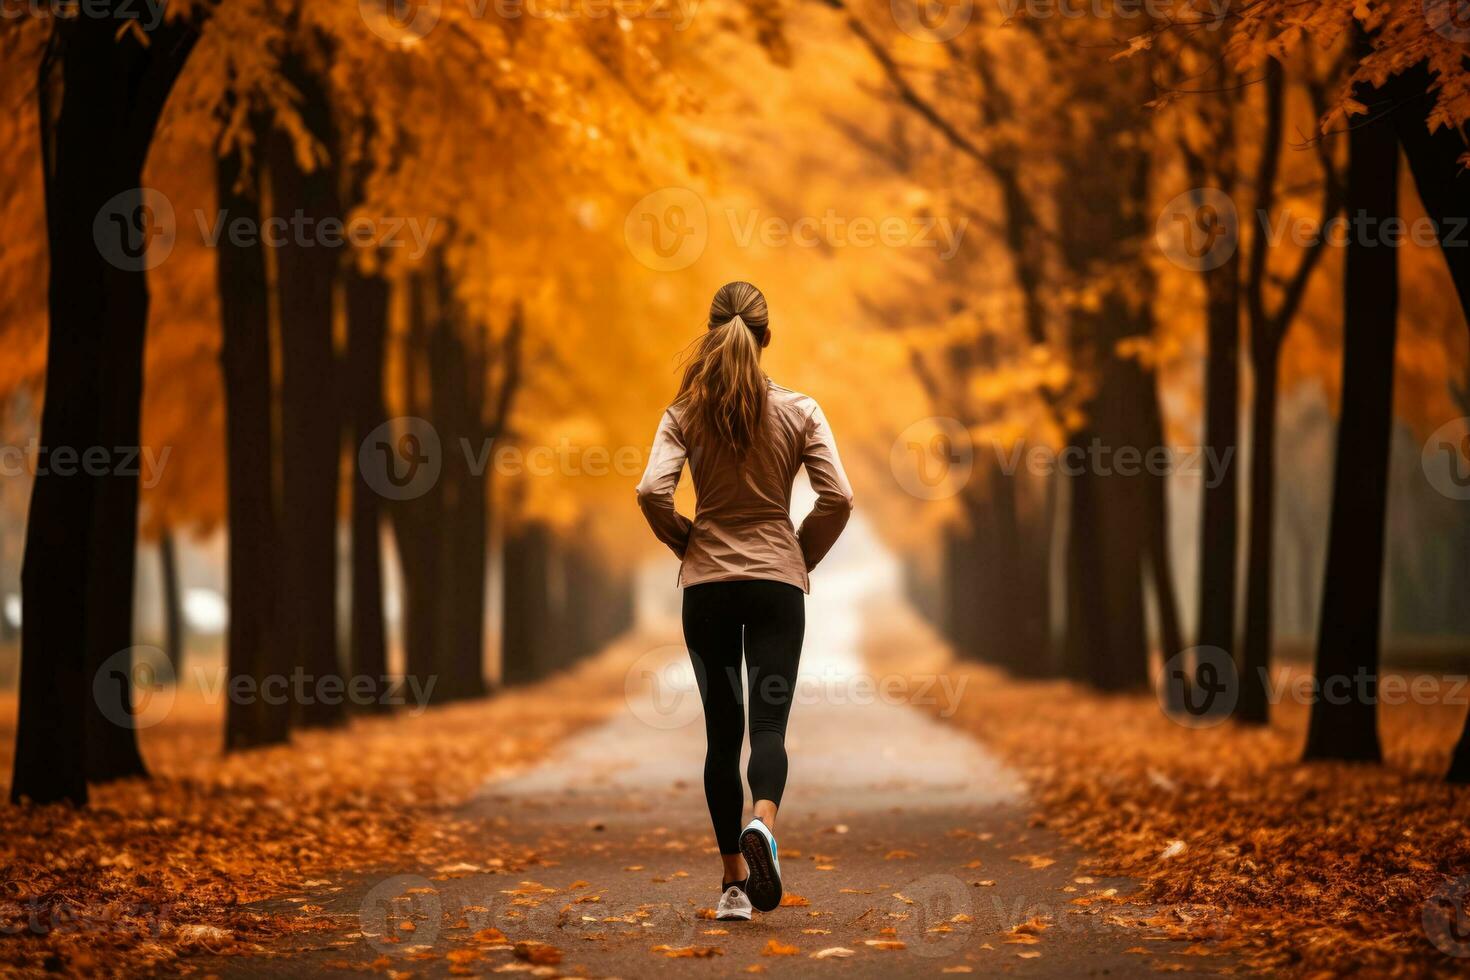 Individual jogging through a leaf strewn park during autumn to boost immunity photo